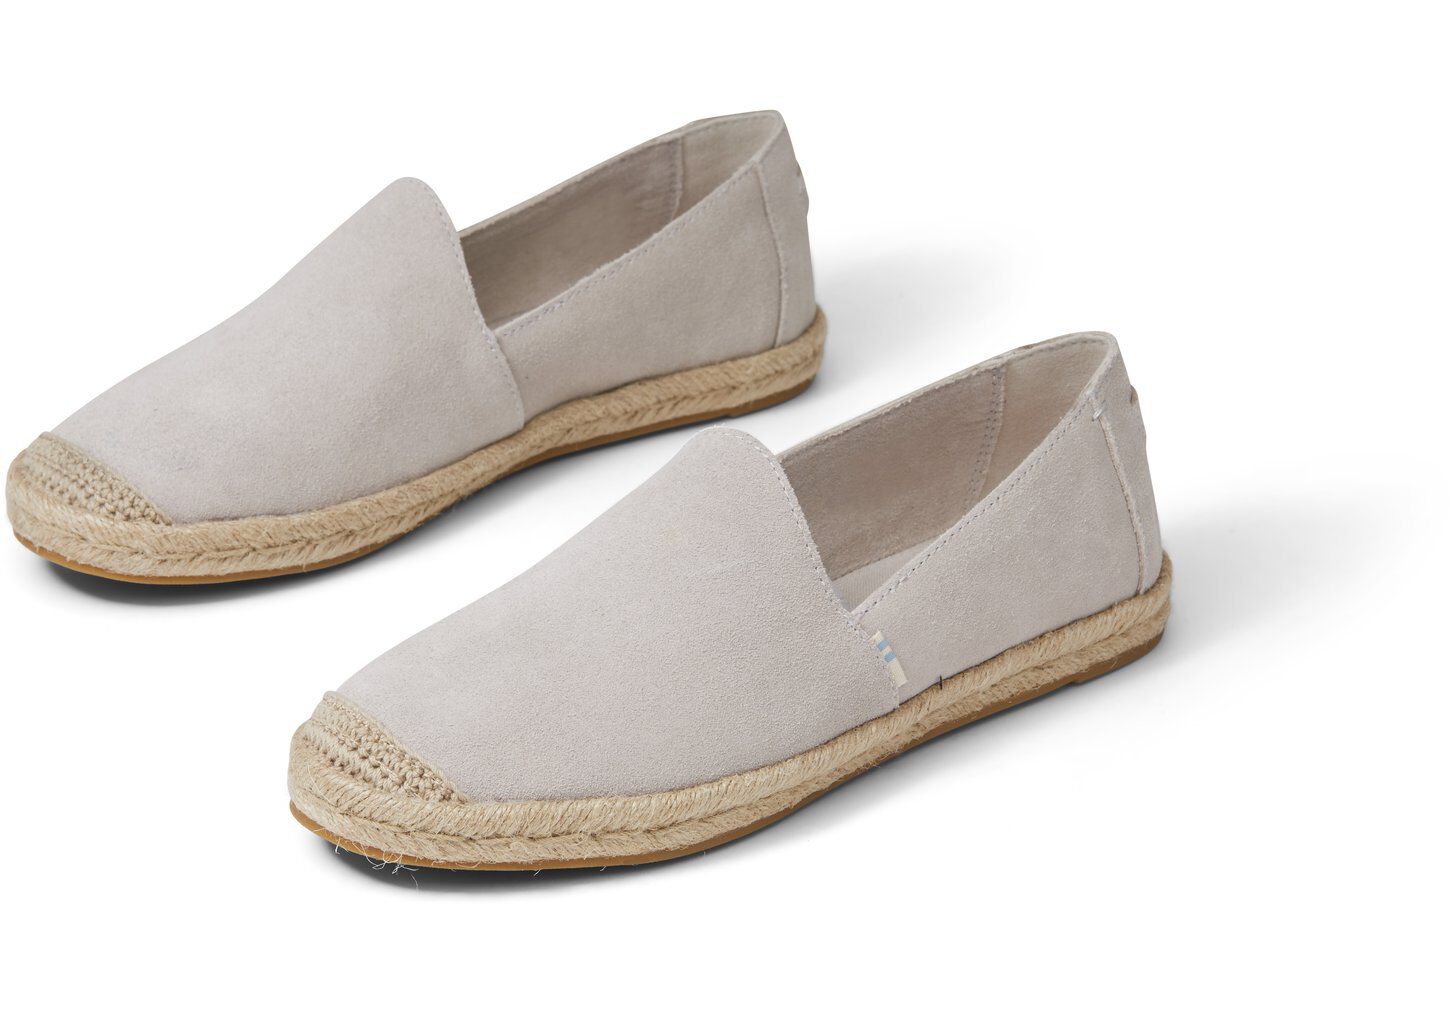 Details about   Toms Classic Grey Multi Womens Espadrilles Slipons Shoes 